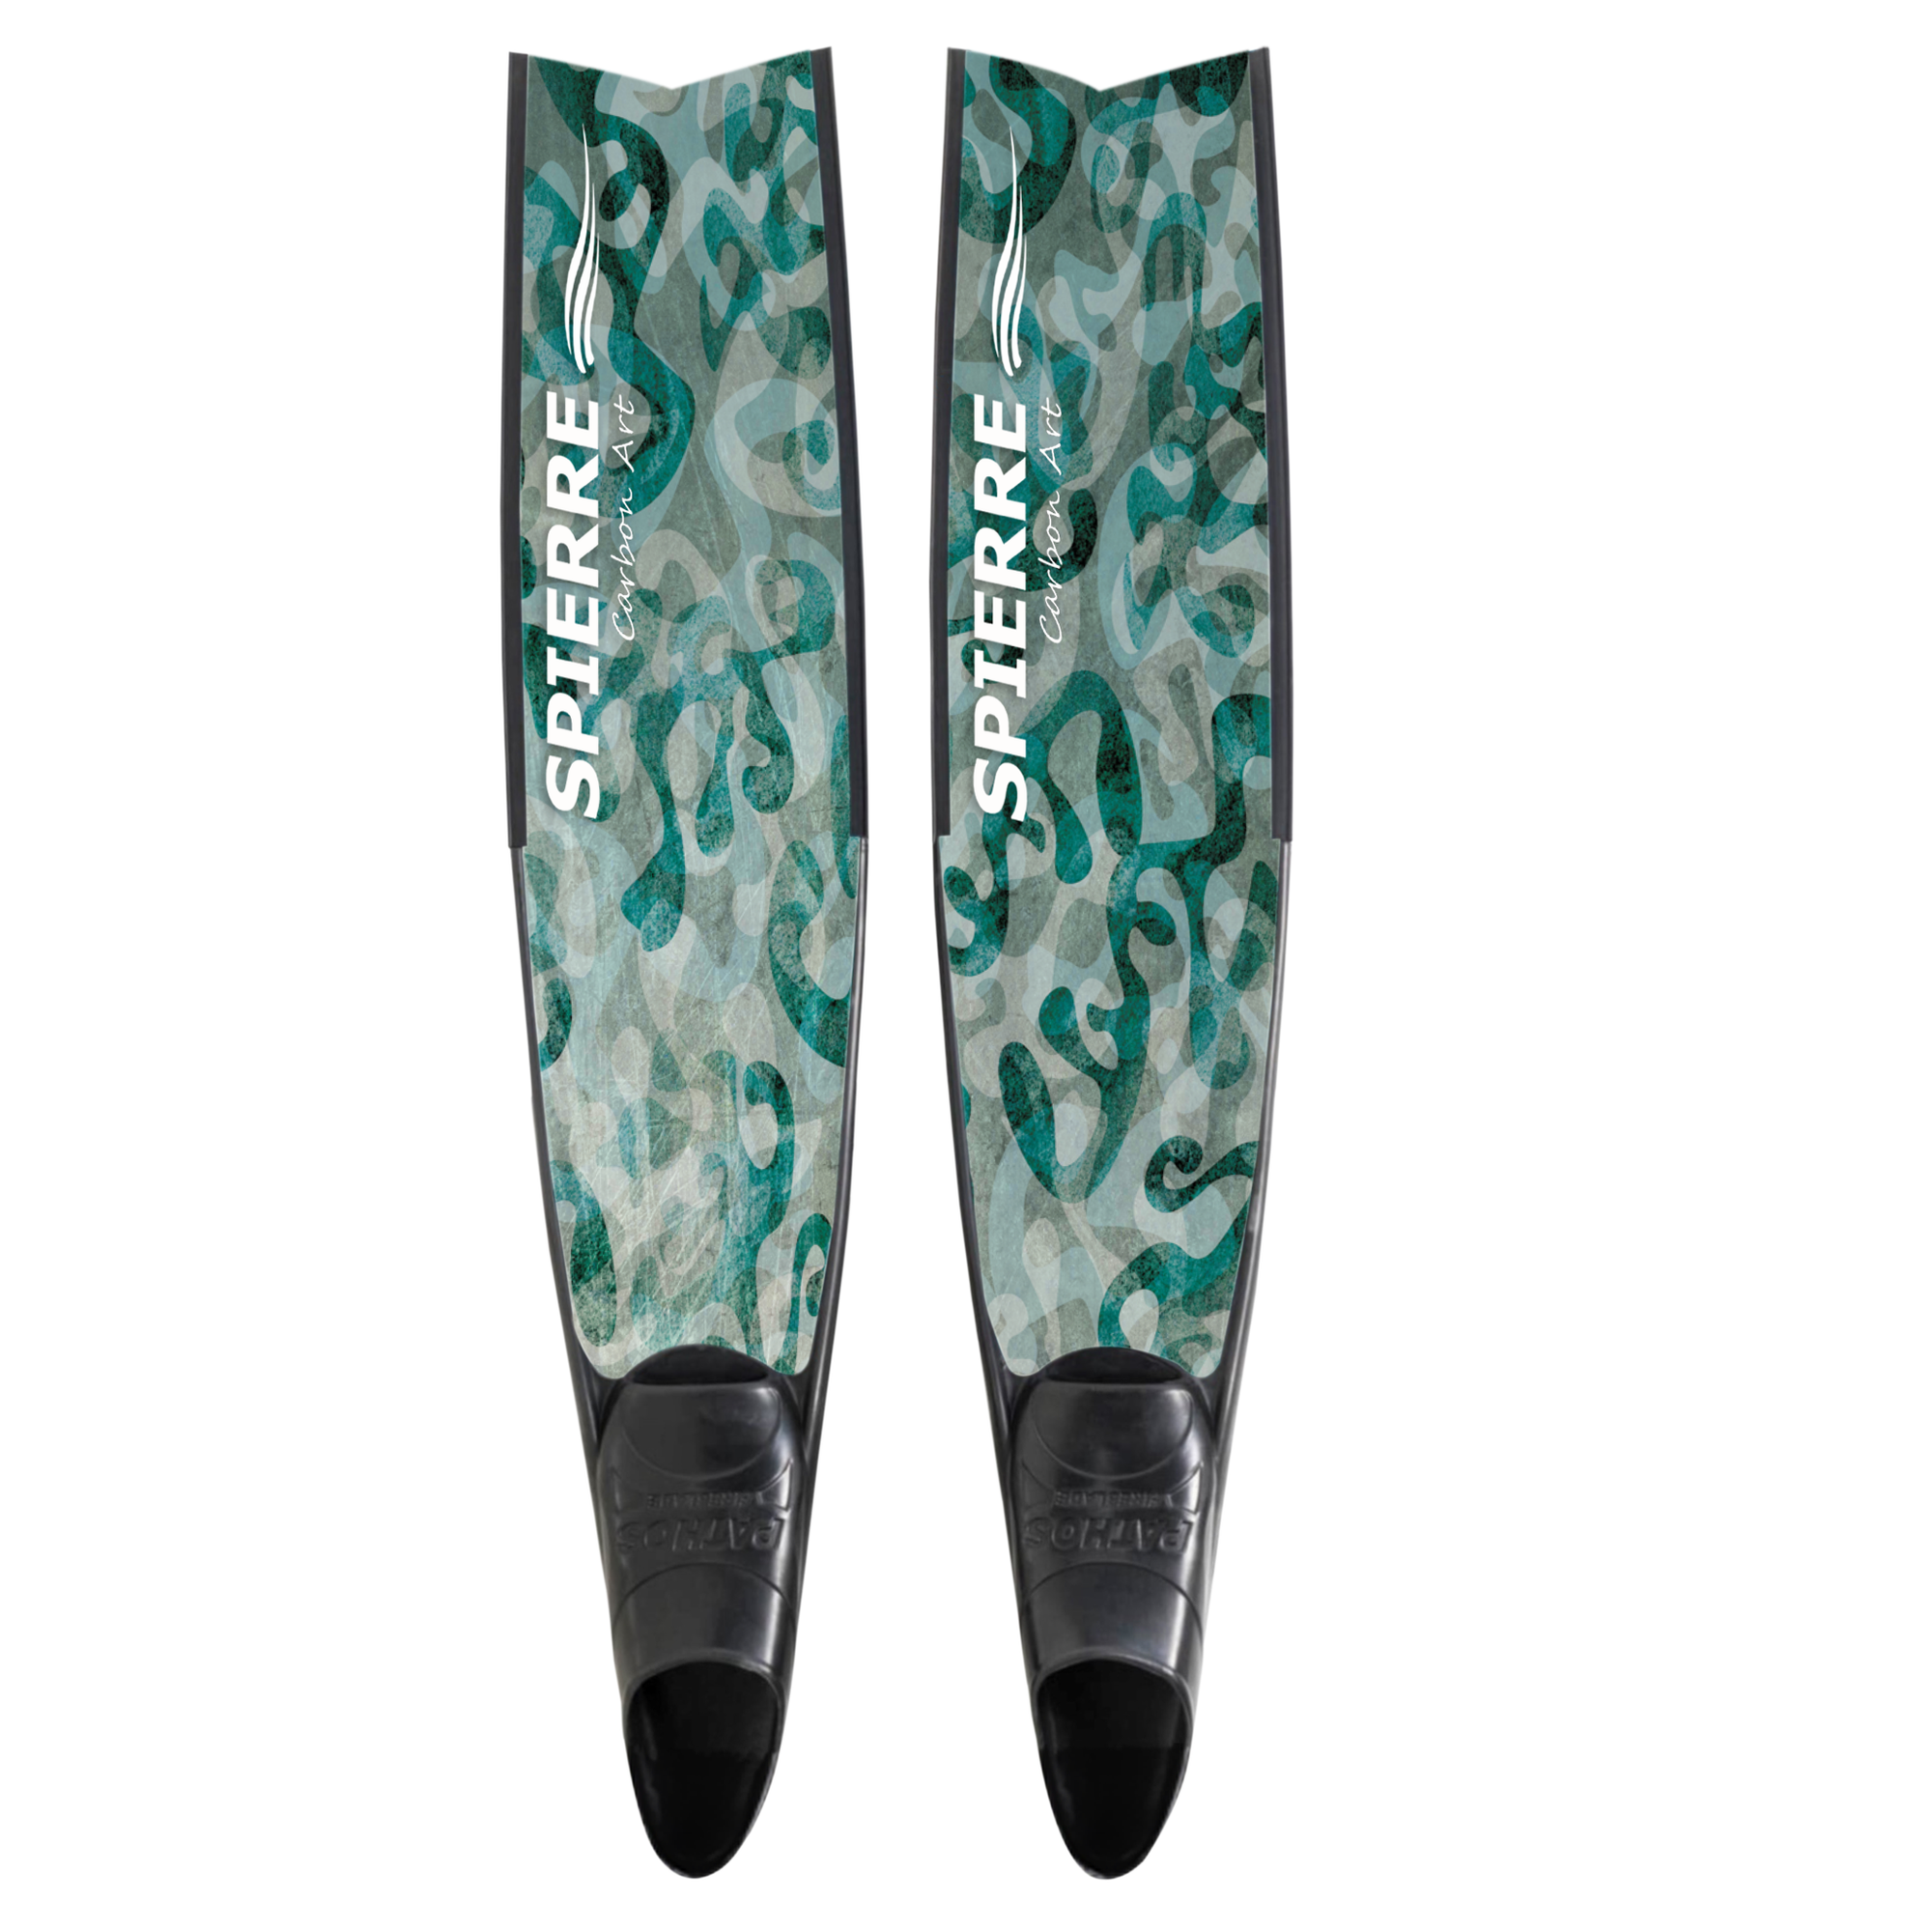 Carbon Art Blue Kelp Reef Fin Blades  - Apnea Range (Set/Pair)